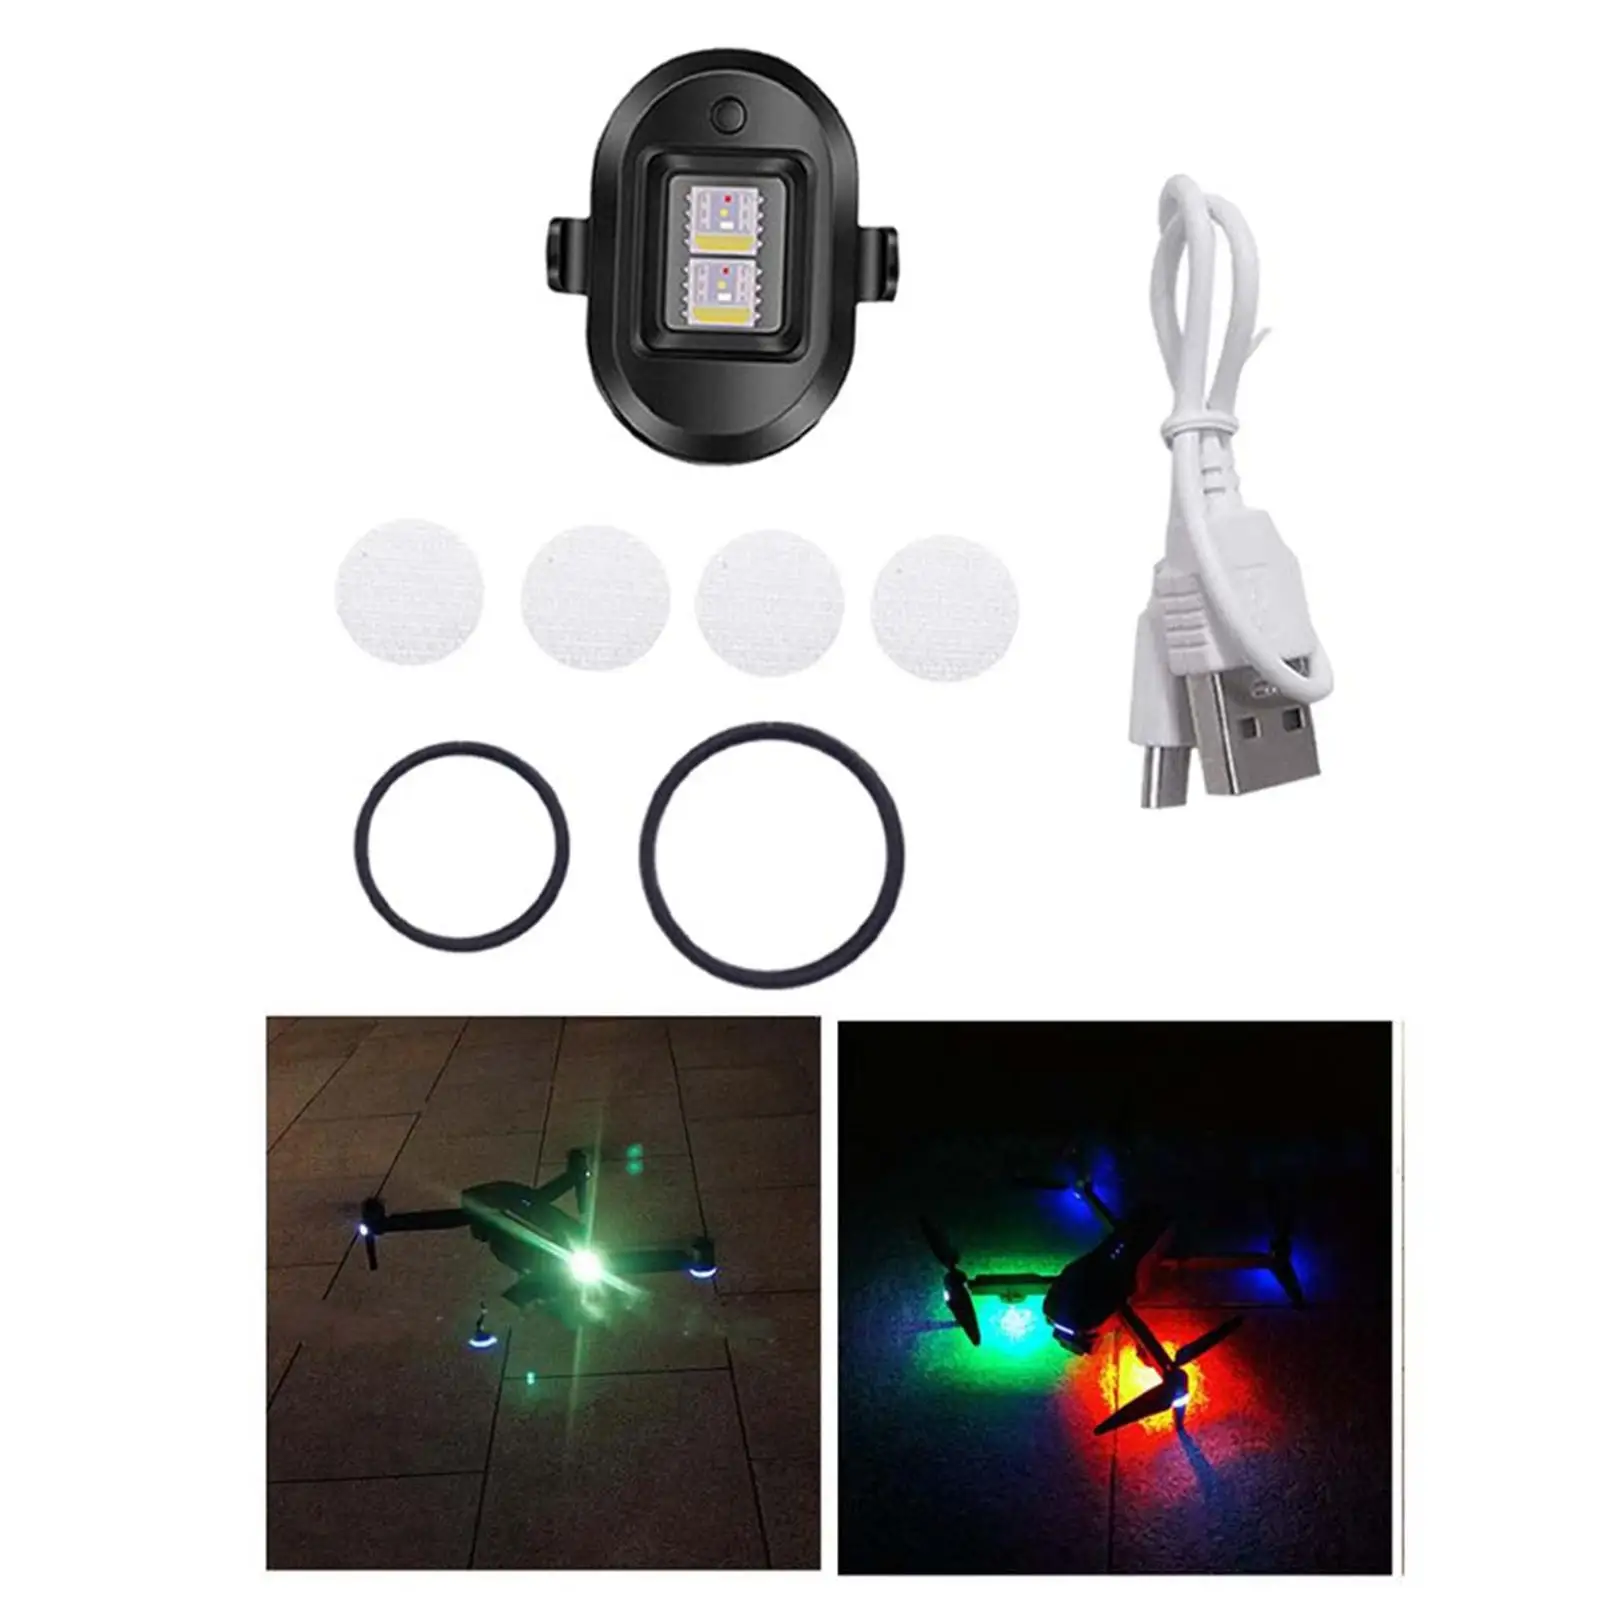 5.5G Drone Strobe Light Night Flying Visible USB Charging Anti Collision Lighting for DJI Inspire/ Phantom/ Matrice Motocycle